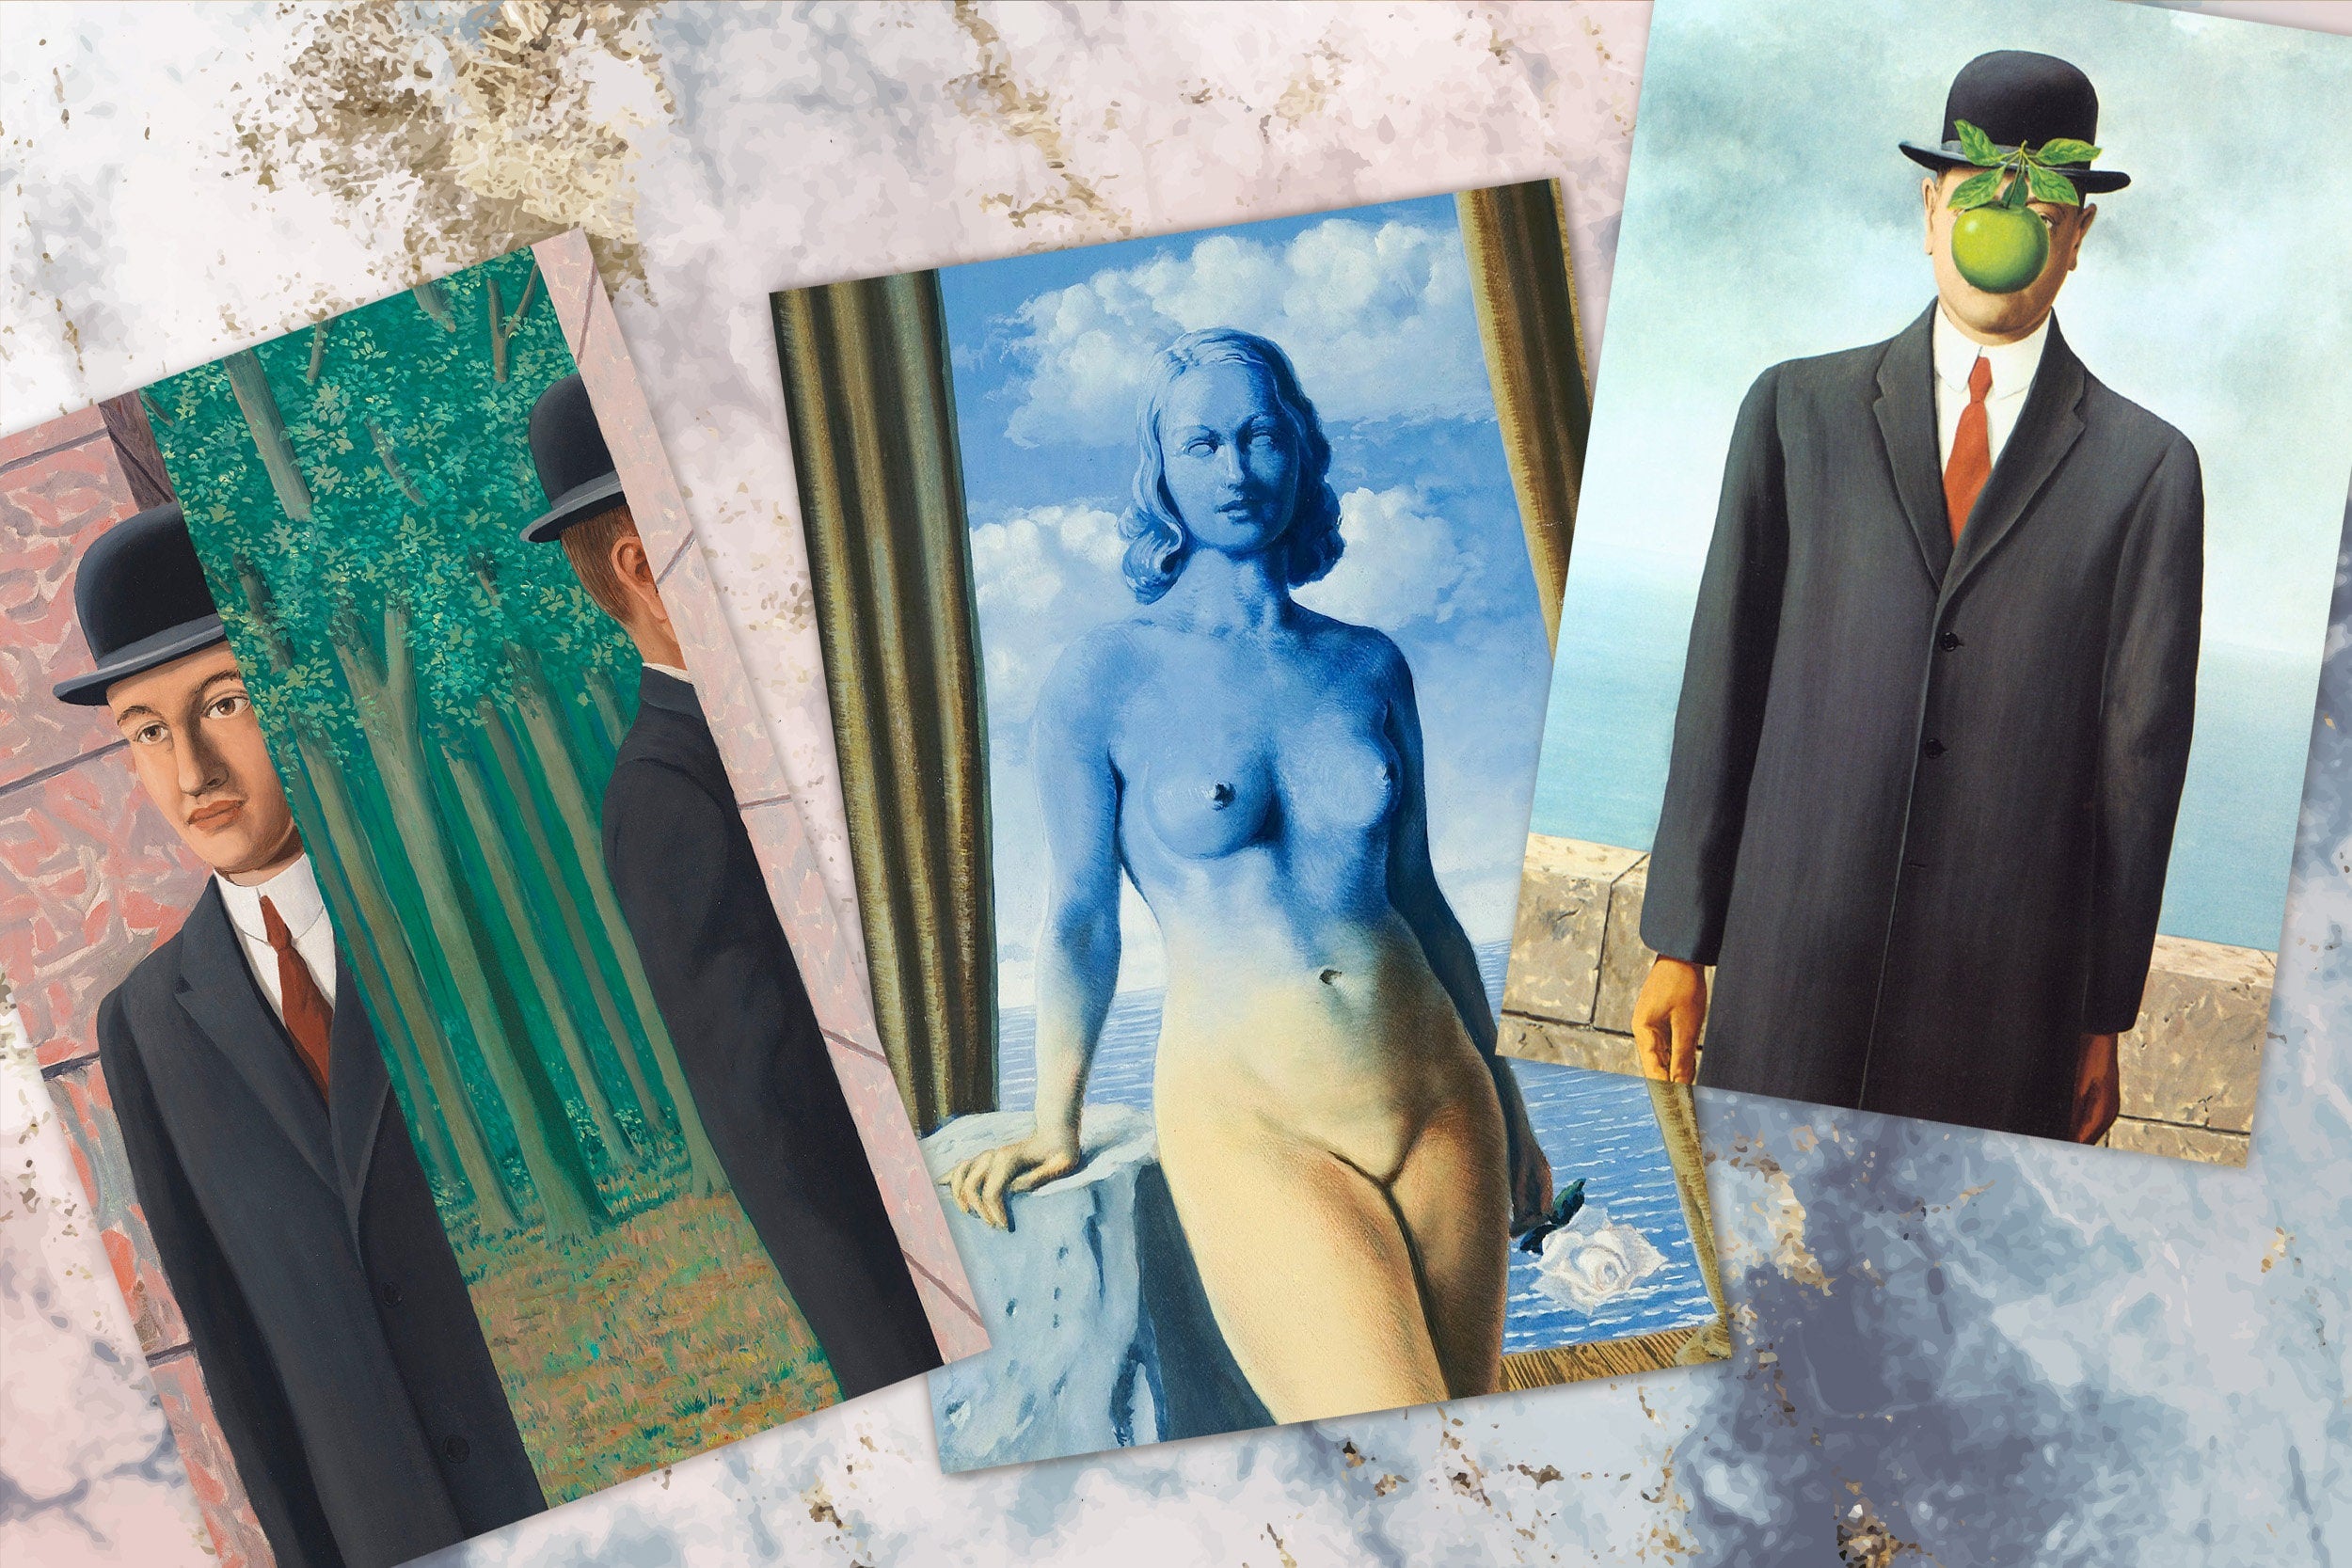 Rene Magritte Surrealist Postcard/Greeting Card Set, Exclusively Designed, 6 Designs, 12 Cards